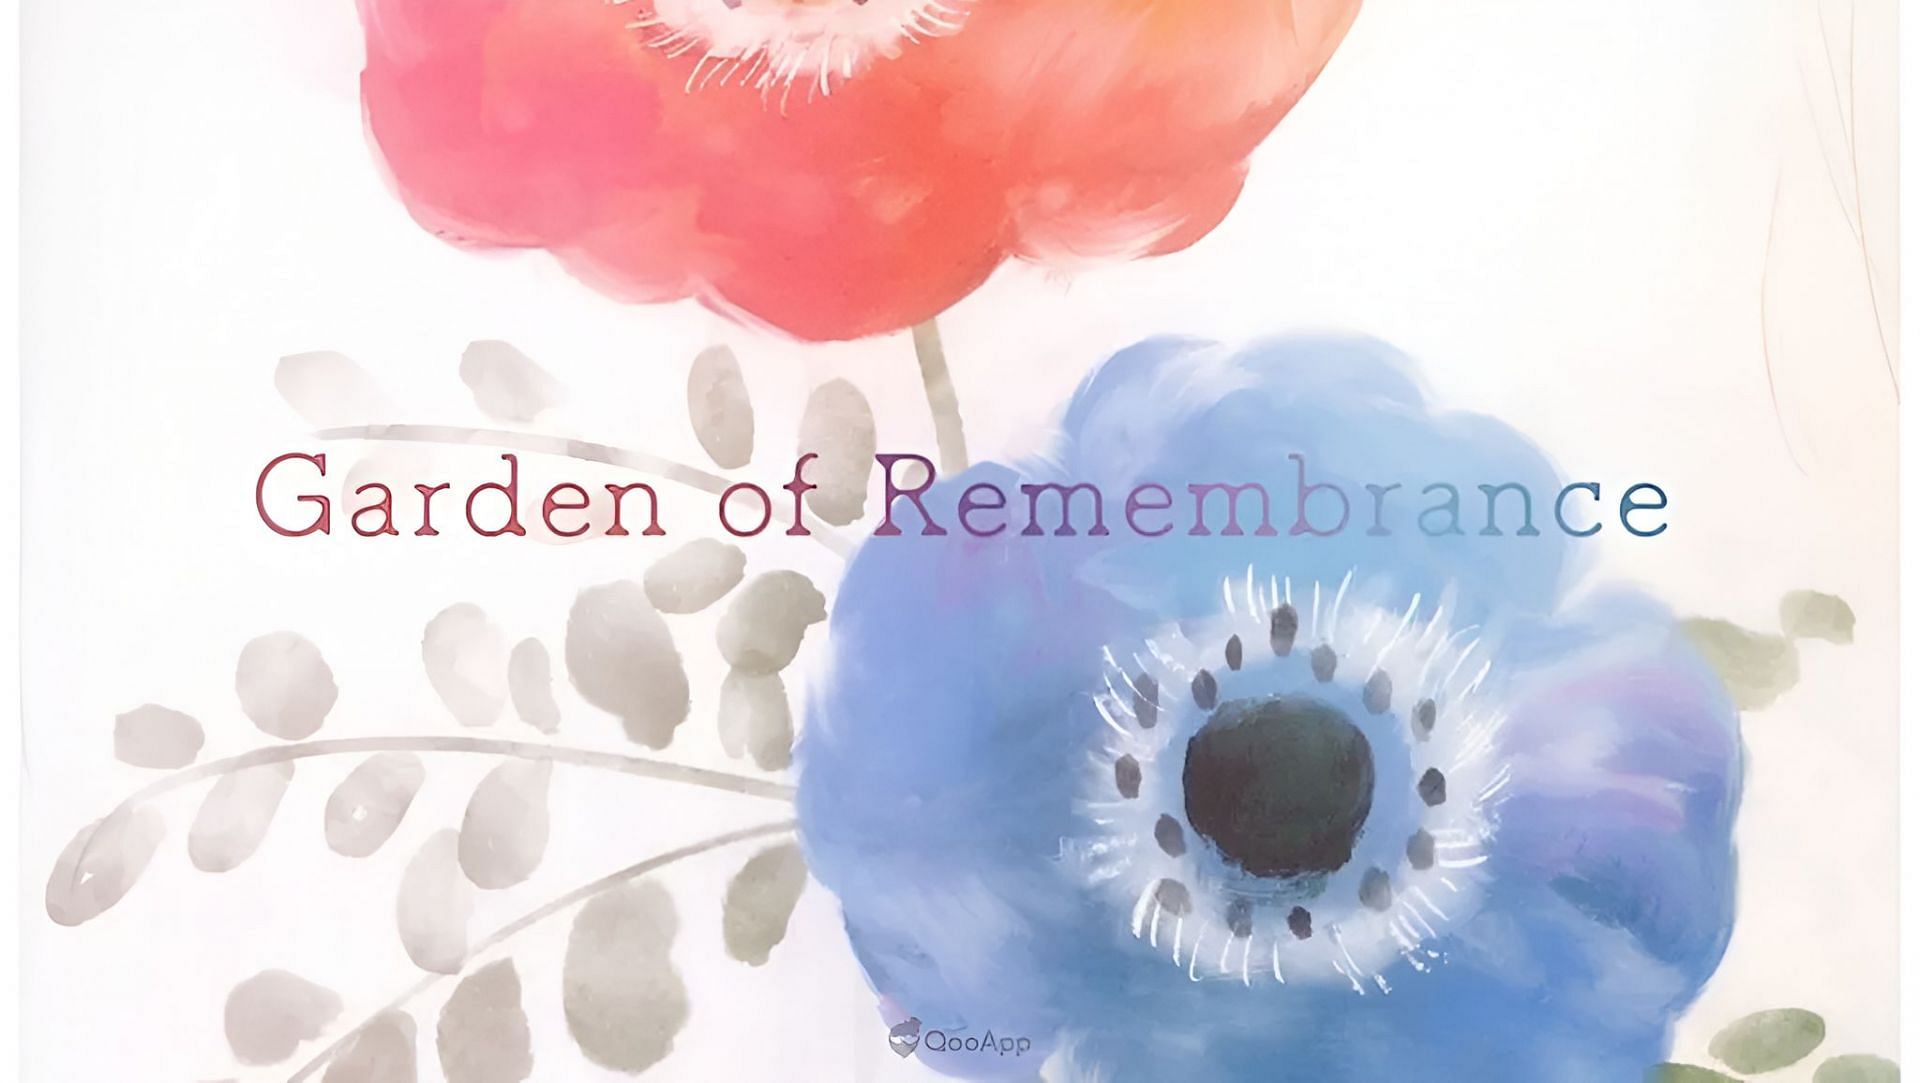 Garden of Remembrance key visual (Image via Science SARU)